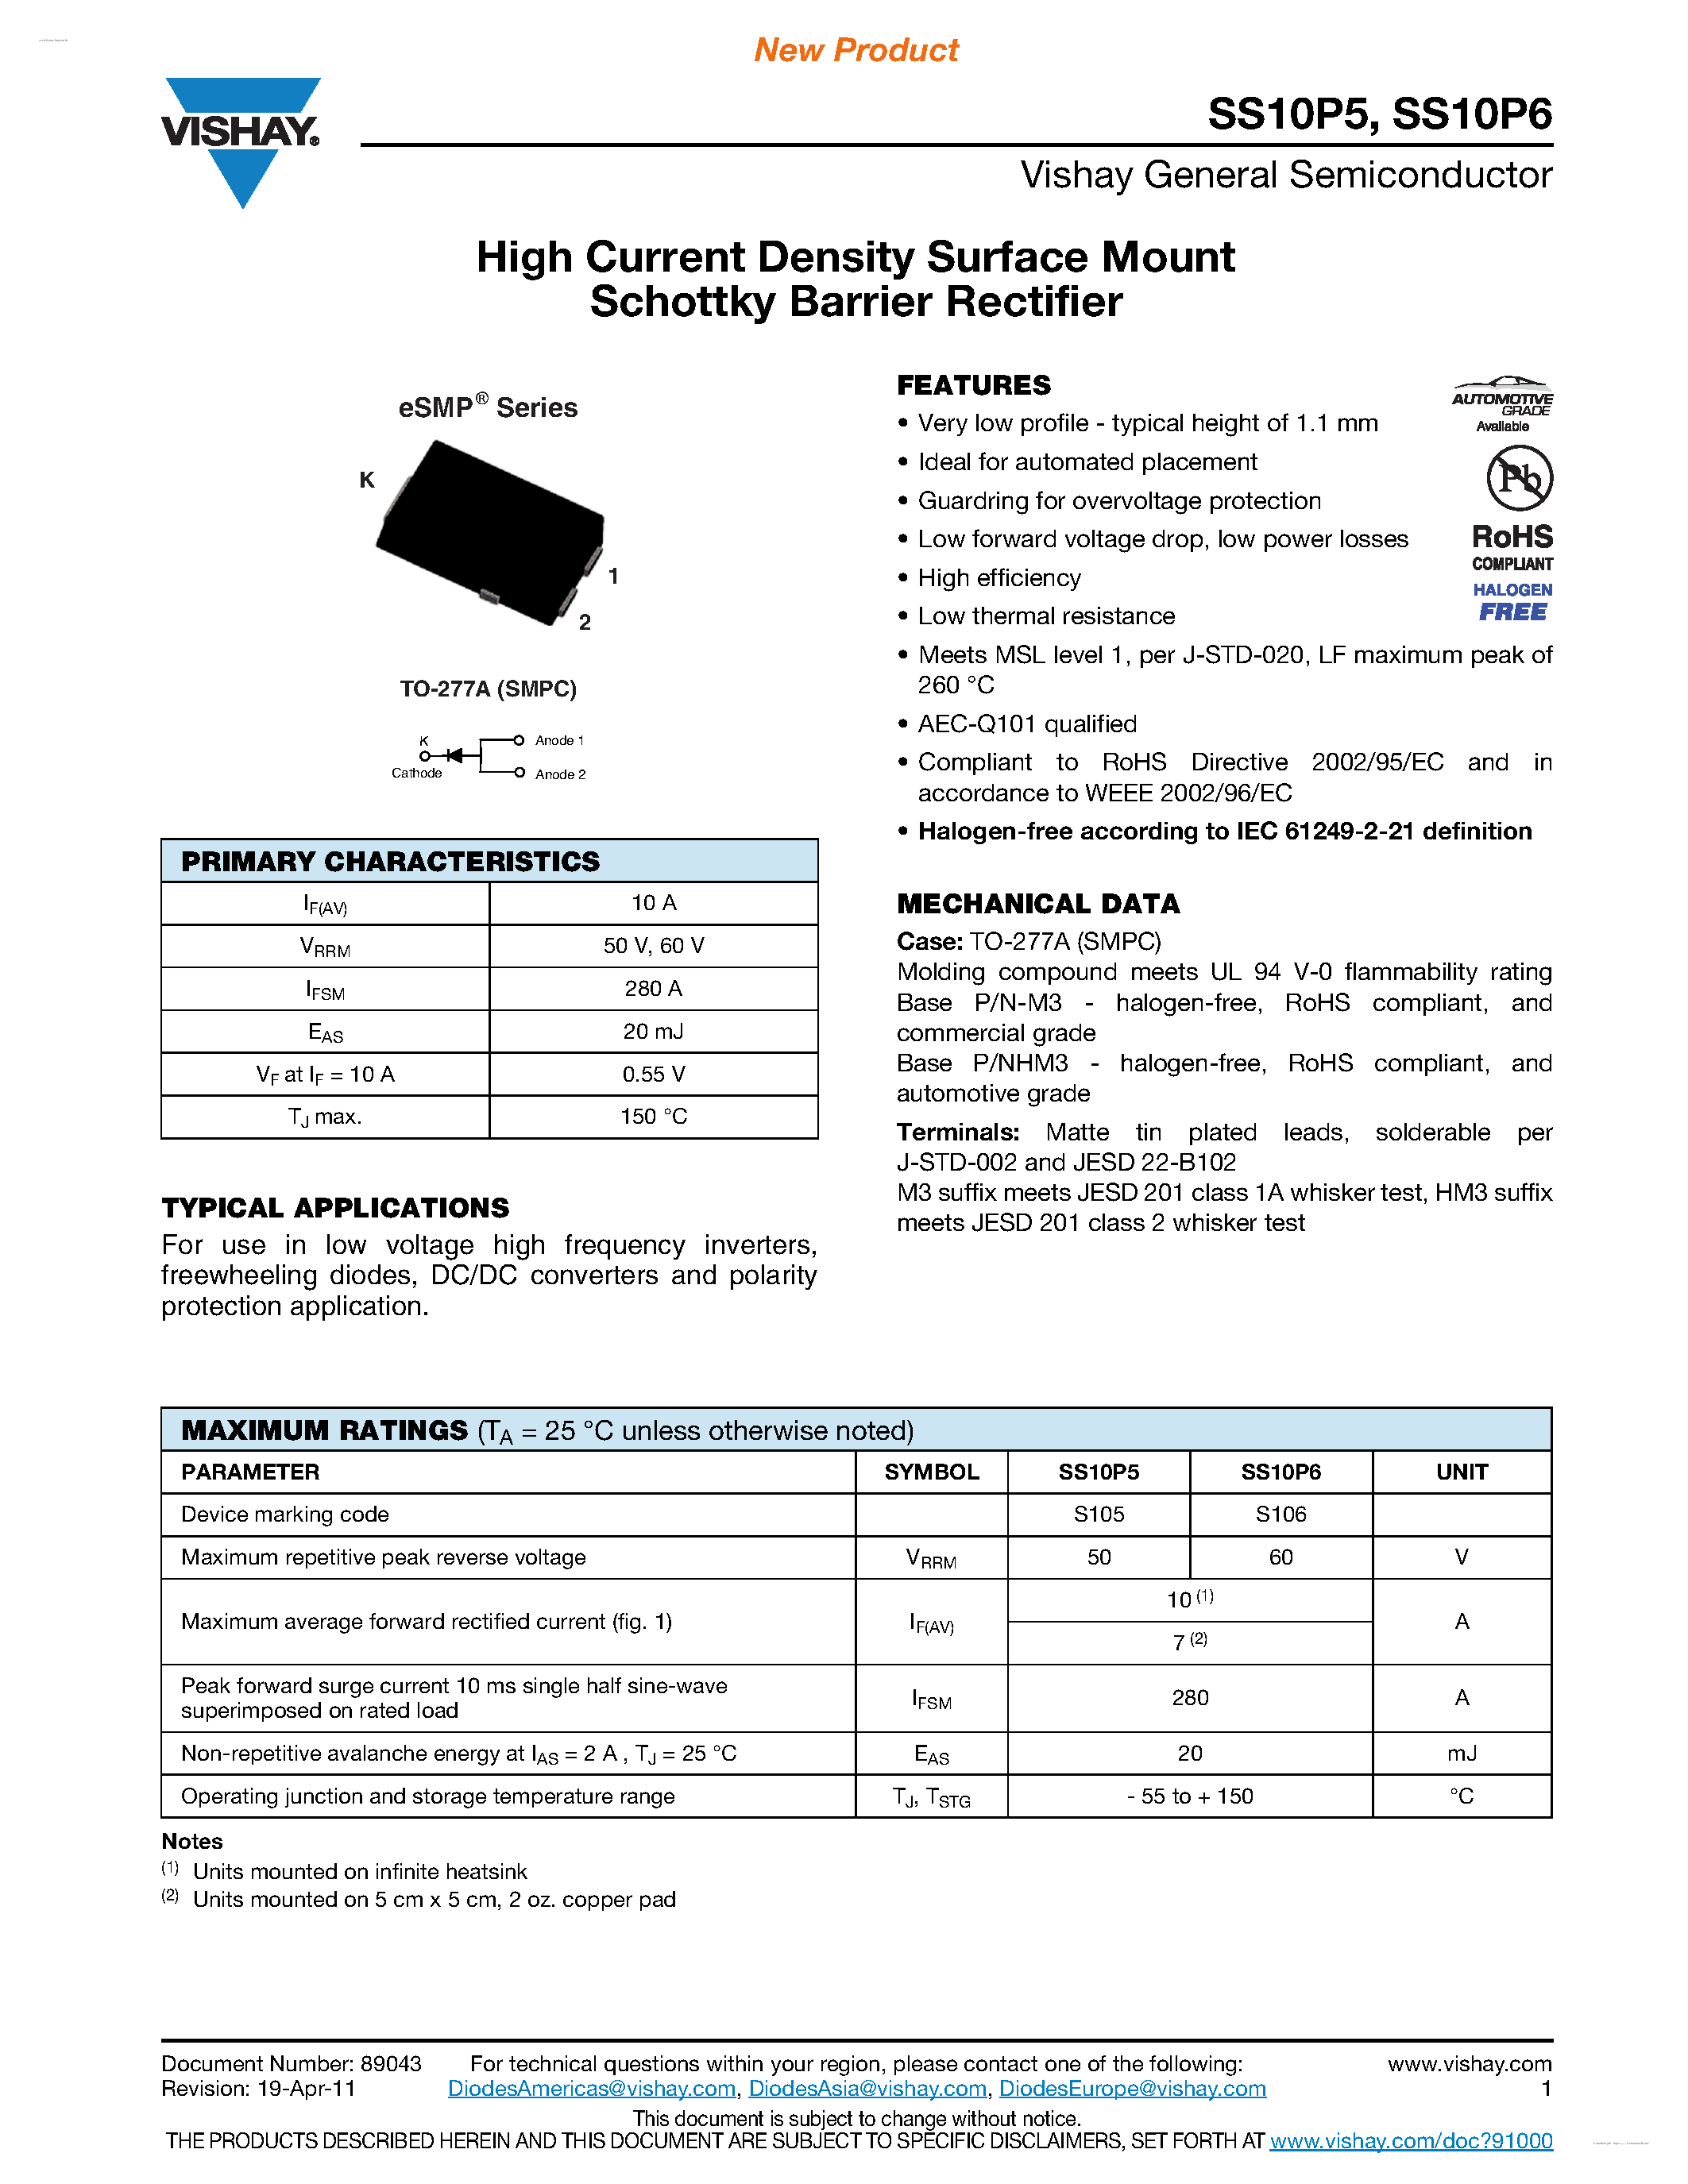 Datasheet SS10P5 - (SS10P5 / SS10P6) High Current Density Surface Mount Schottky Barrier Rectifier page 1